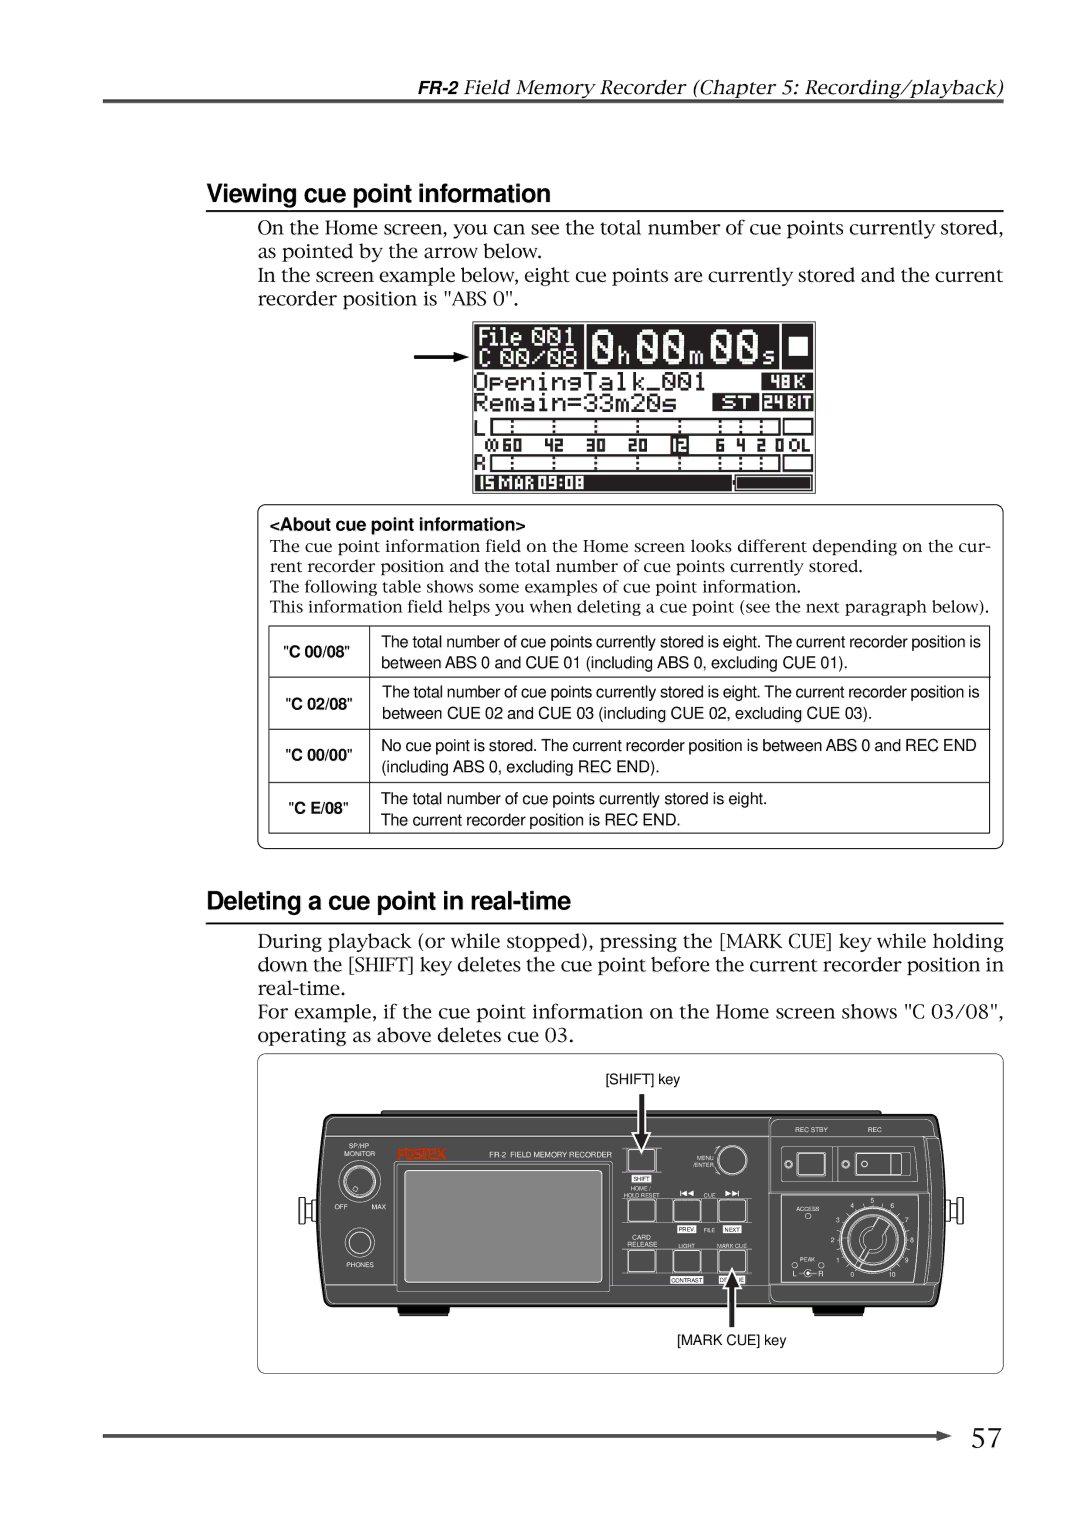 Fostex FR-2 Viewing cue point information, Deleting a cue point in real-time, About cue point information, 00/08, 02/08 